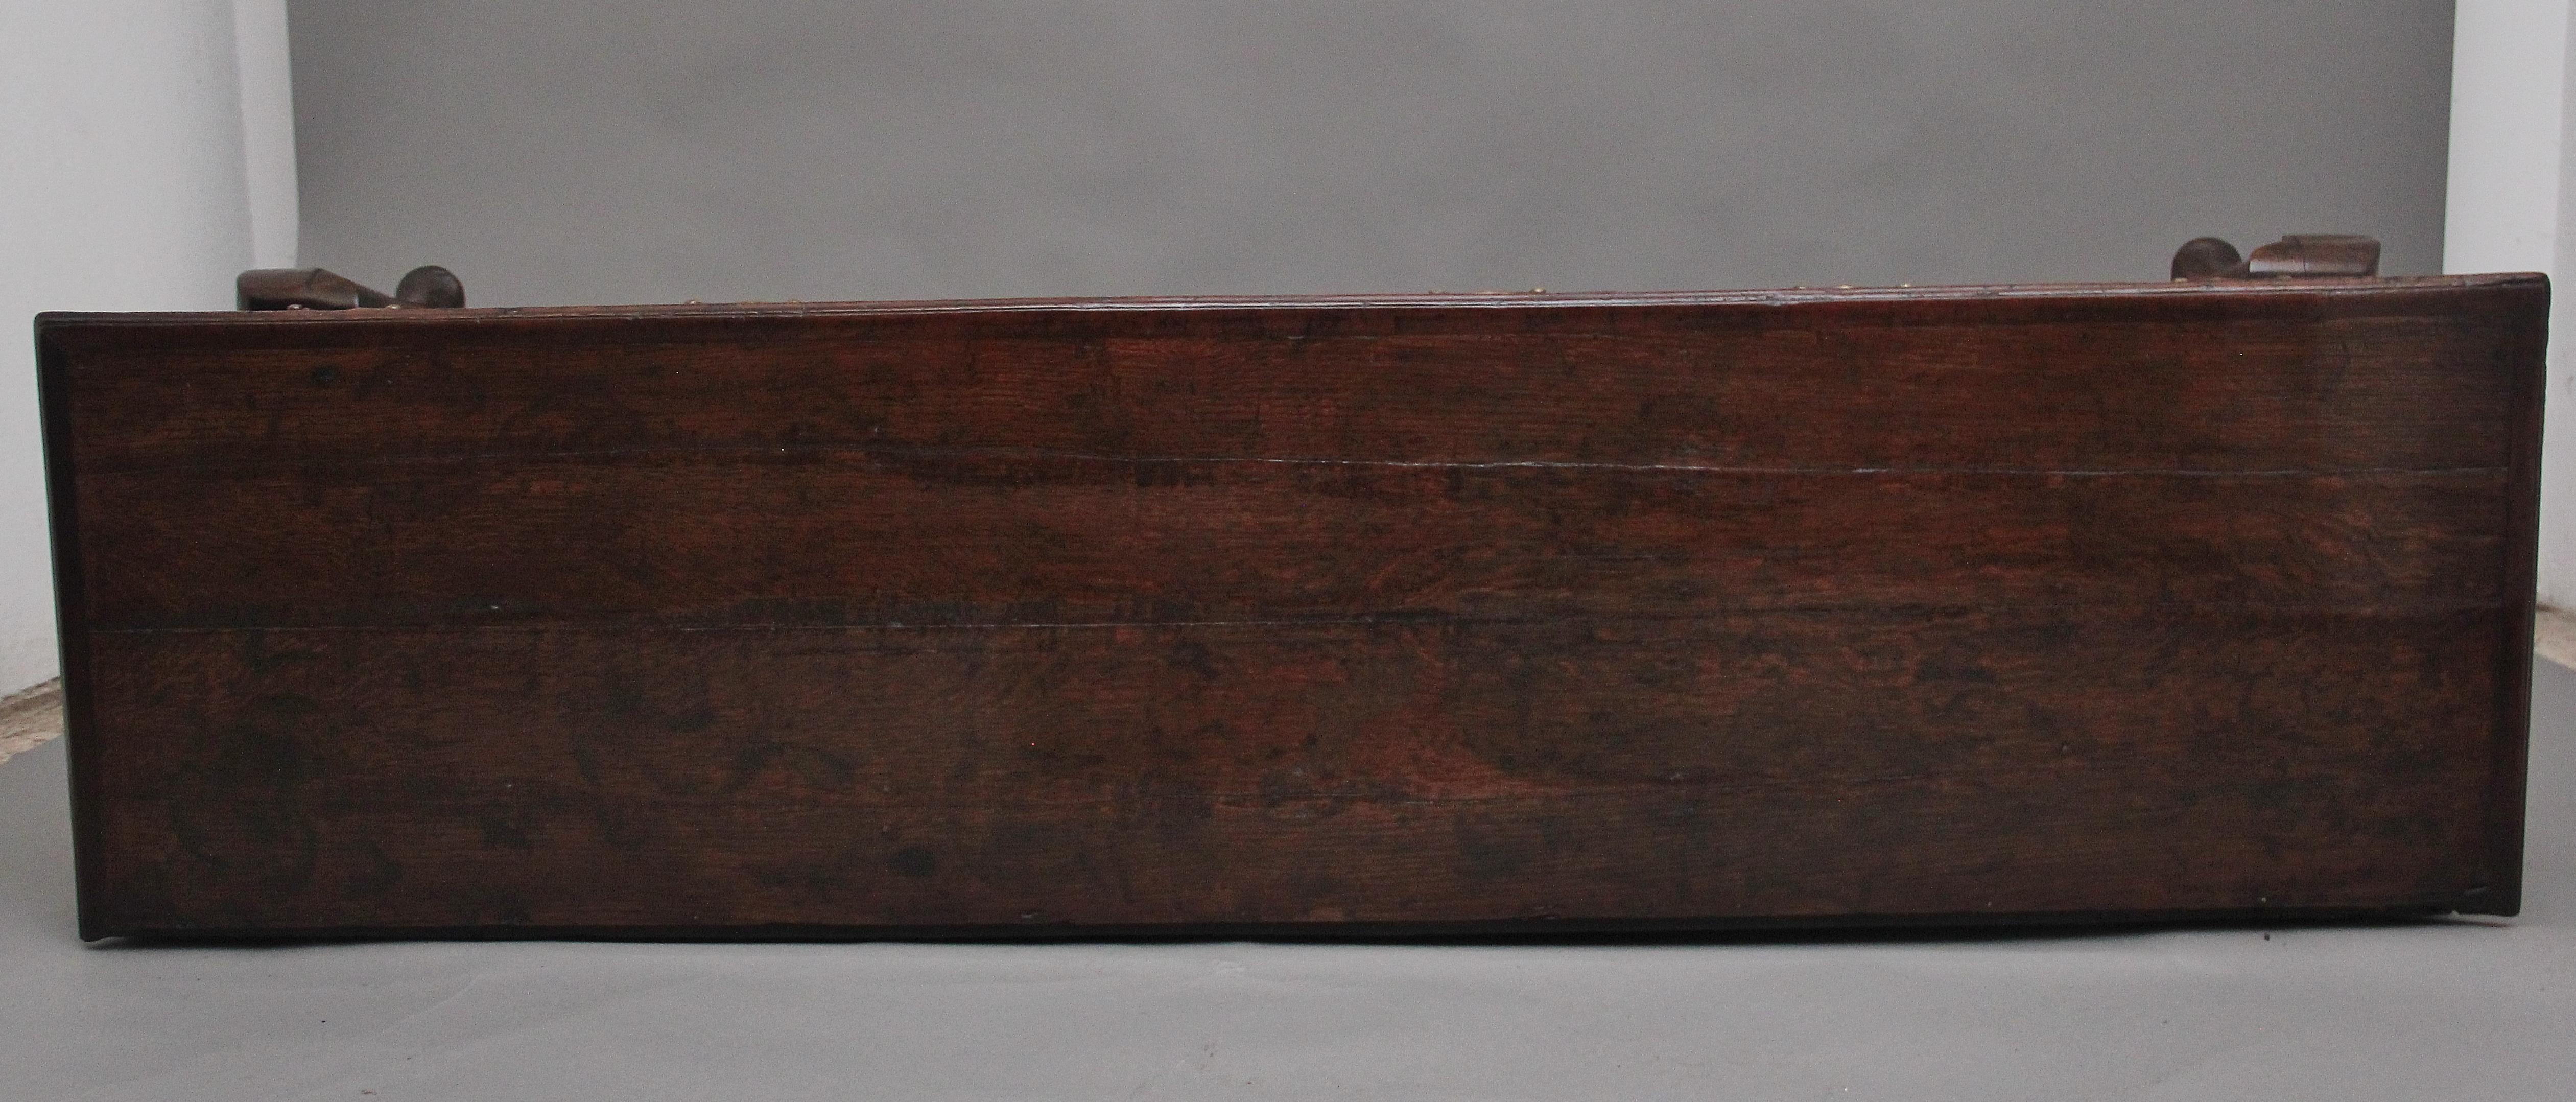 18th Century oak cabriole leg dresser base For Sale 4